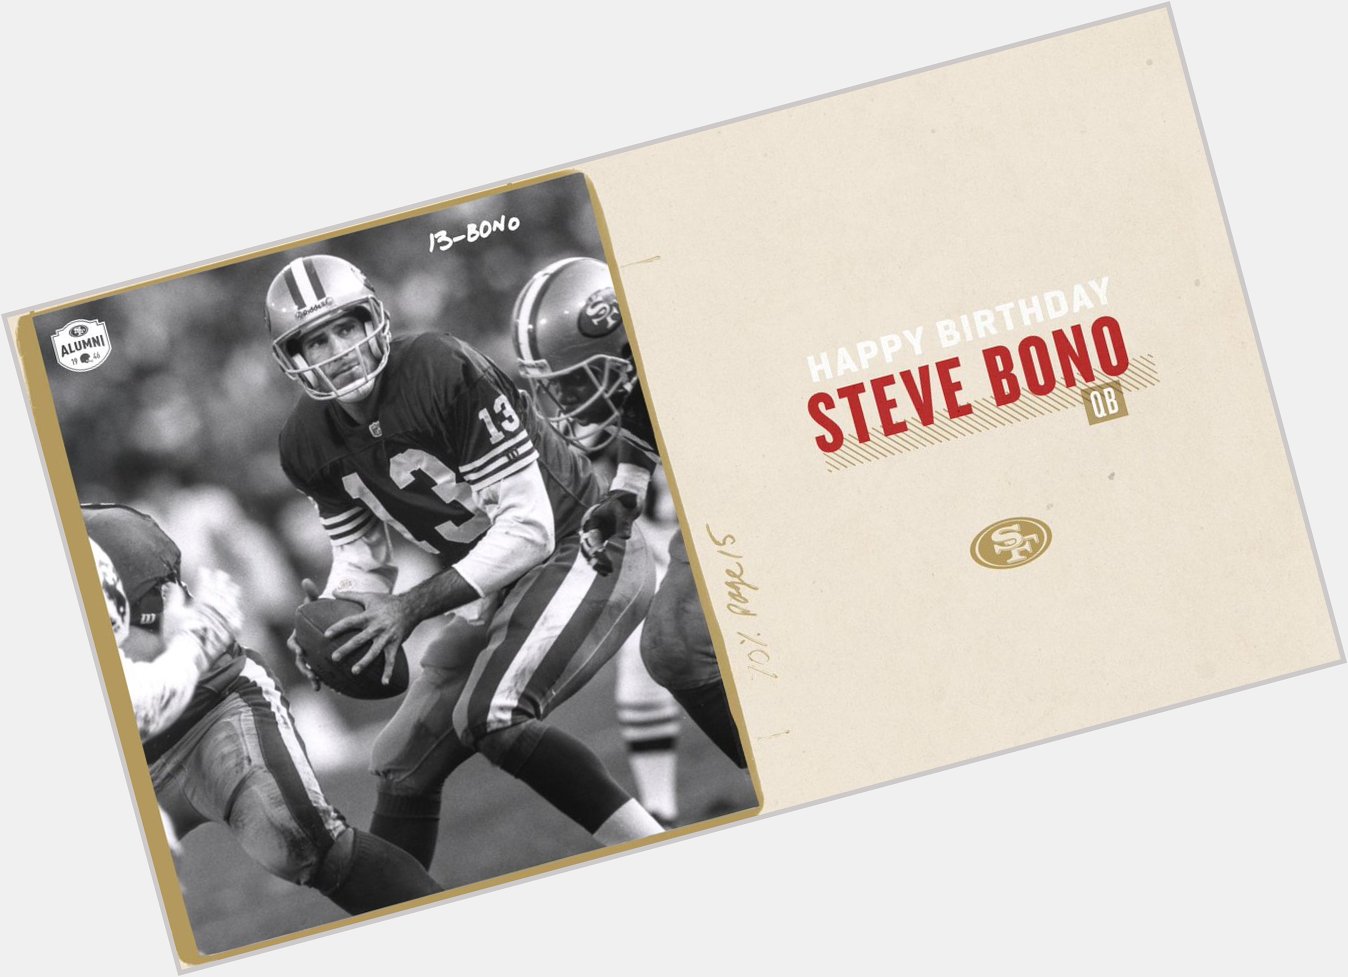 Happy birthday to alum, Steve Bono! 